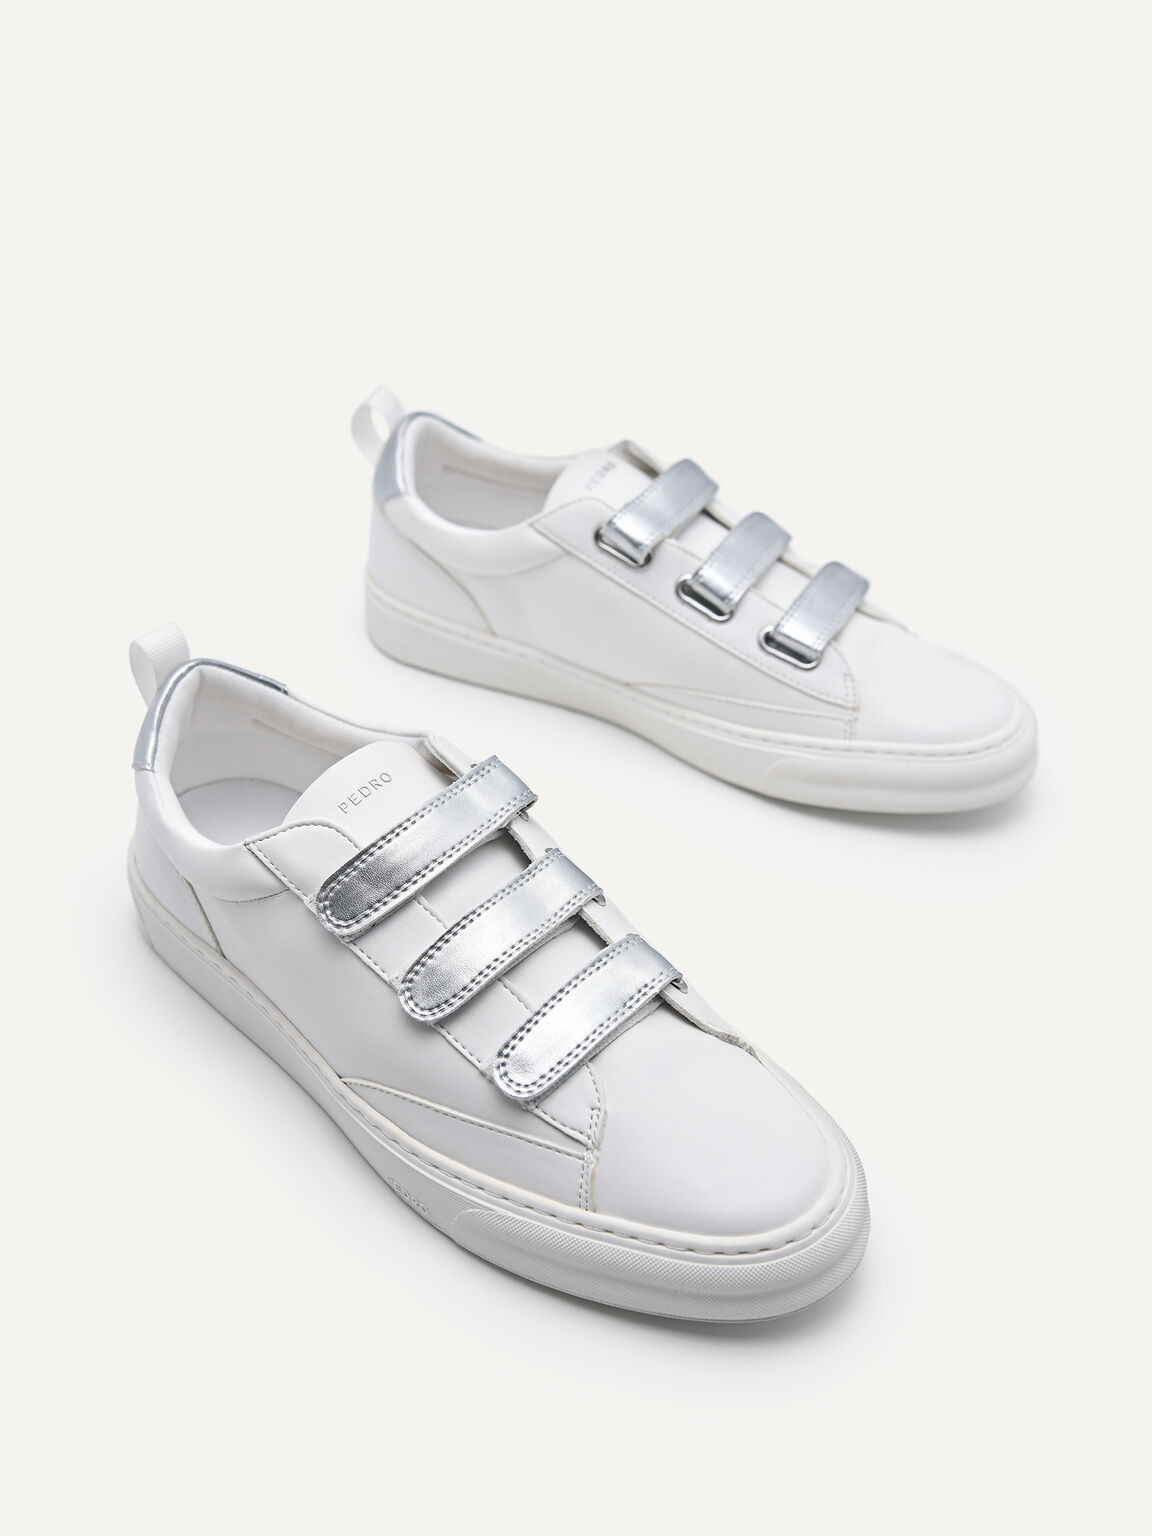 Ridge Velcro Strap Sneakers, White